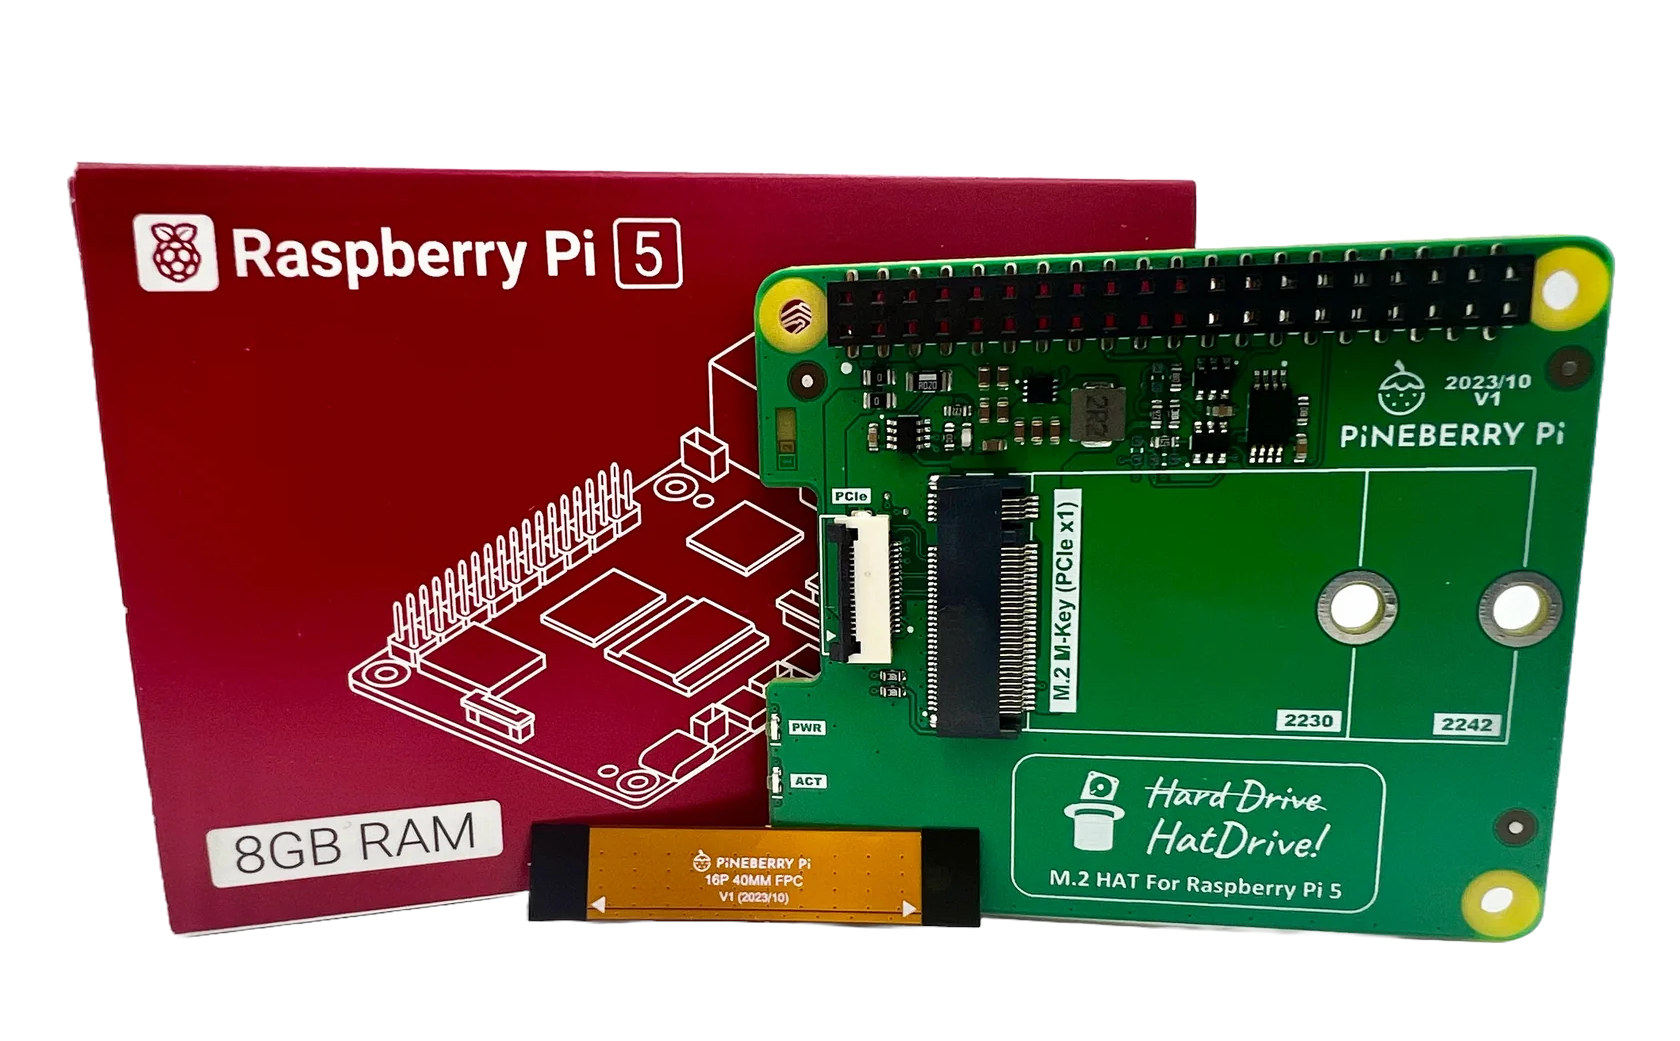 Raspberry Pi 5 gets an M.2 PCIe HAT - Meet PineBerry Pi HatDrive